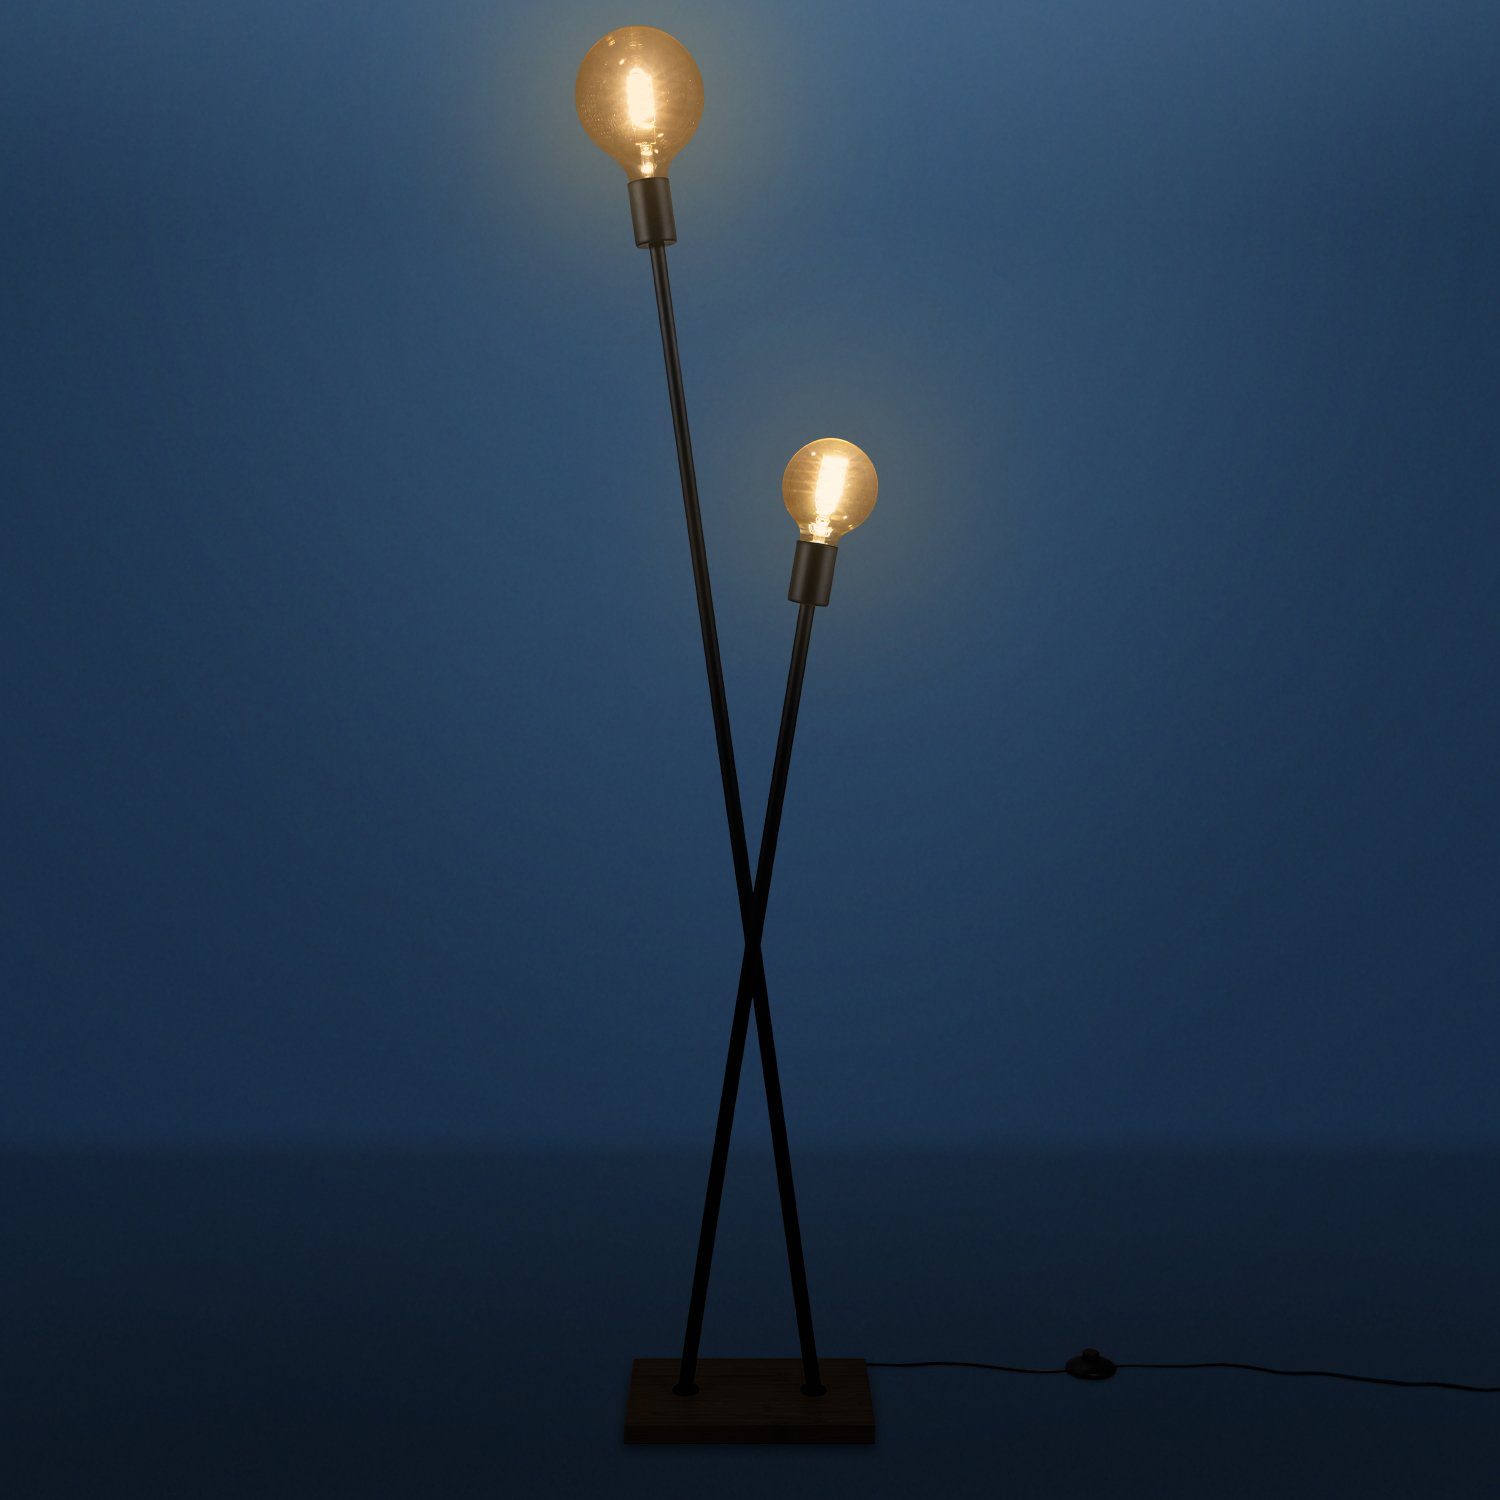 Paco Home Stehlampe IKS, ohne Stehlampe Retro Leuchtmittel, LED Design Wohnzimmer Vintage E27 Lampe Industrial